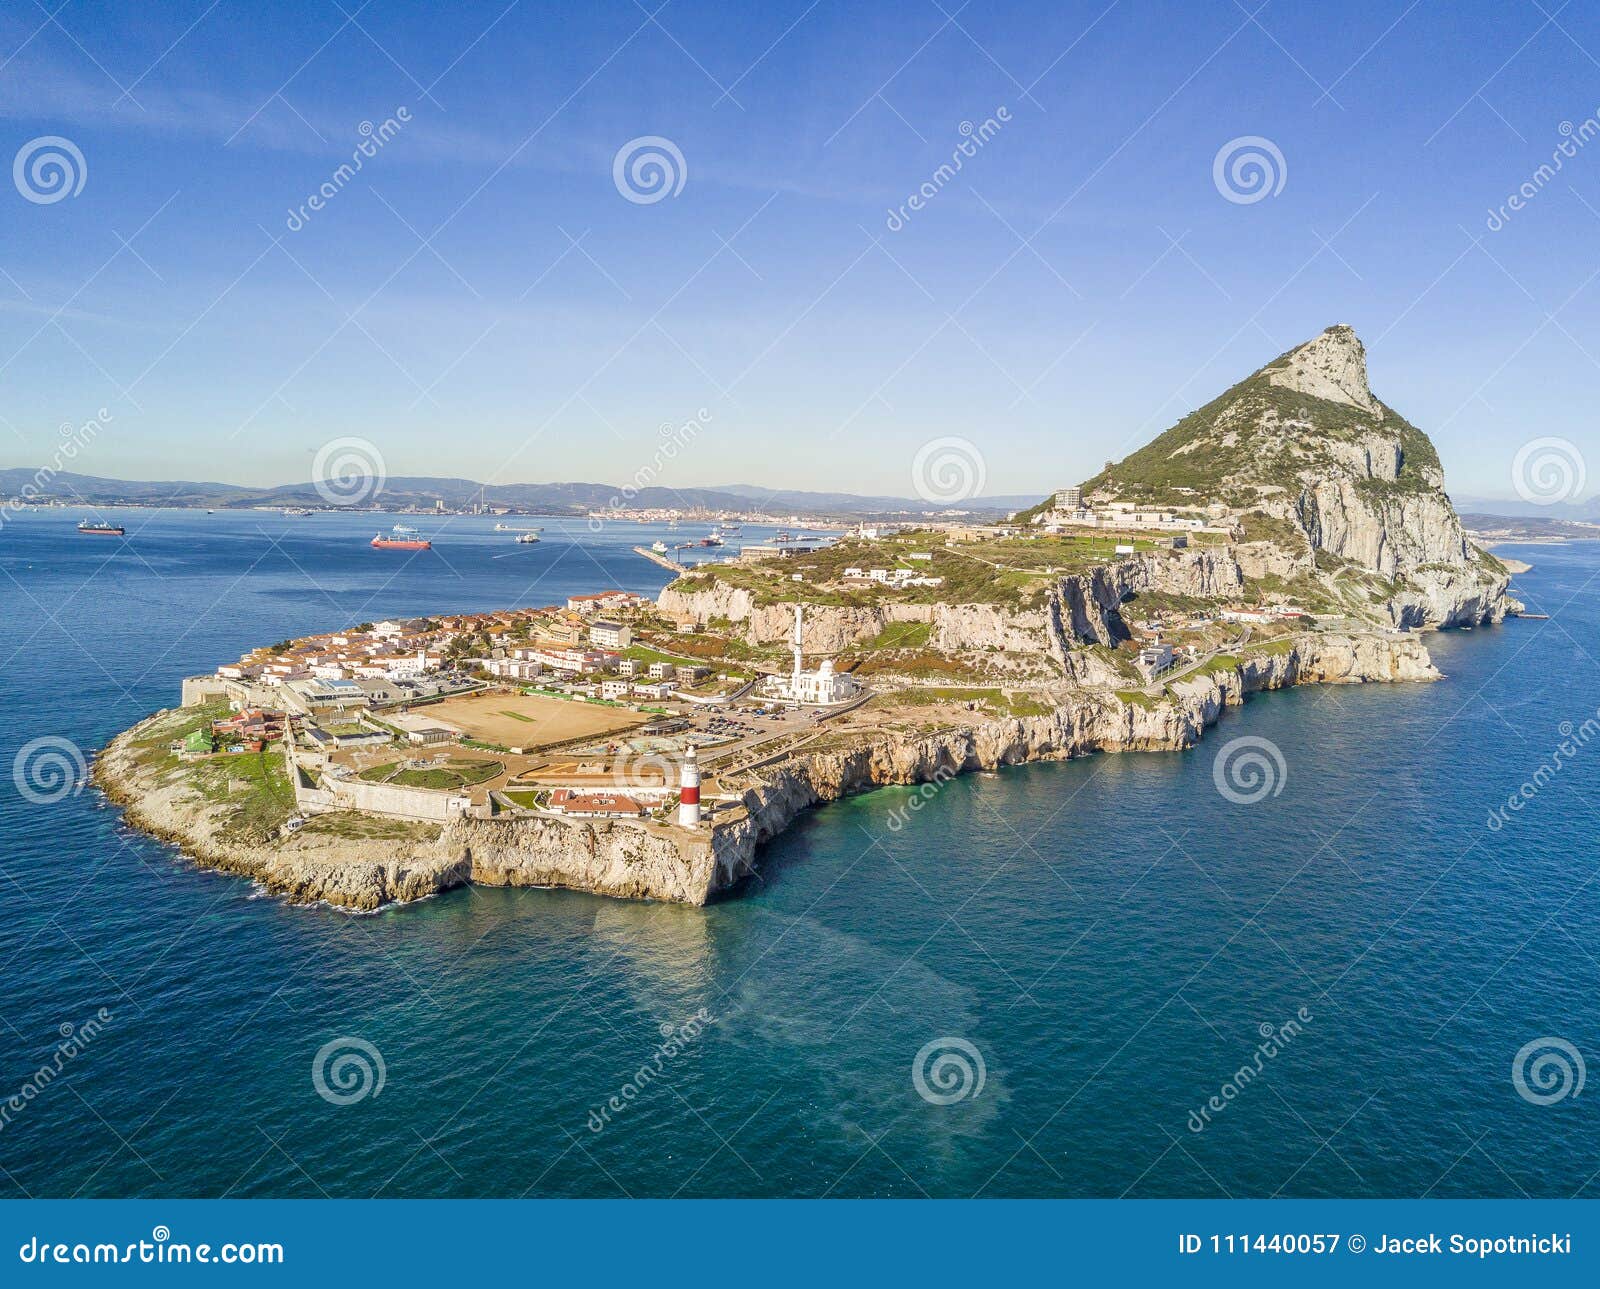 famous gibraltar is an oversea british territory bordering sapin, iberian peninsula